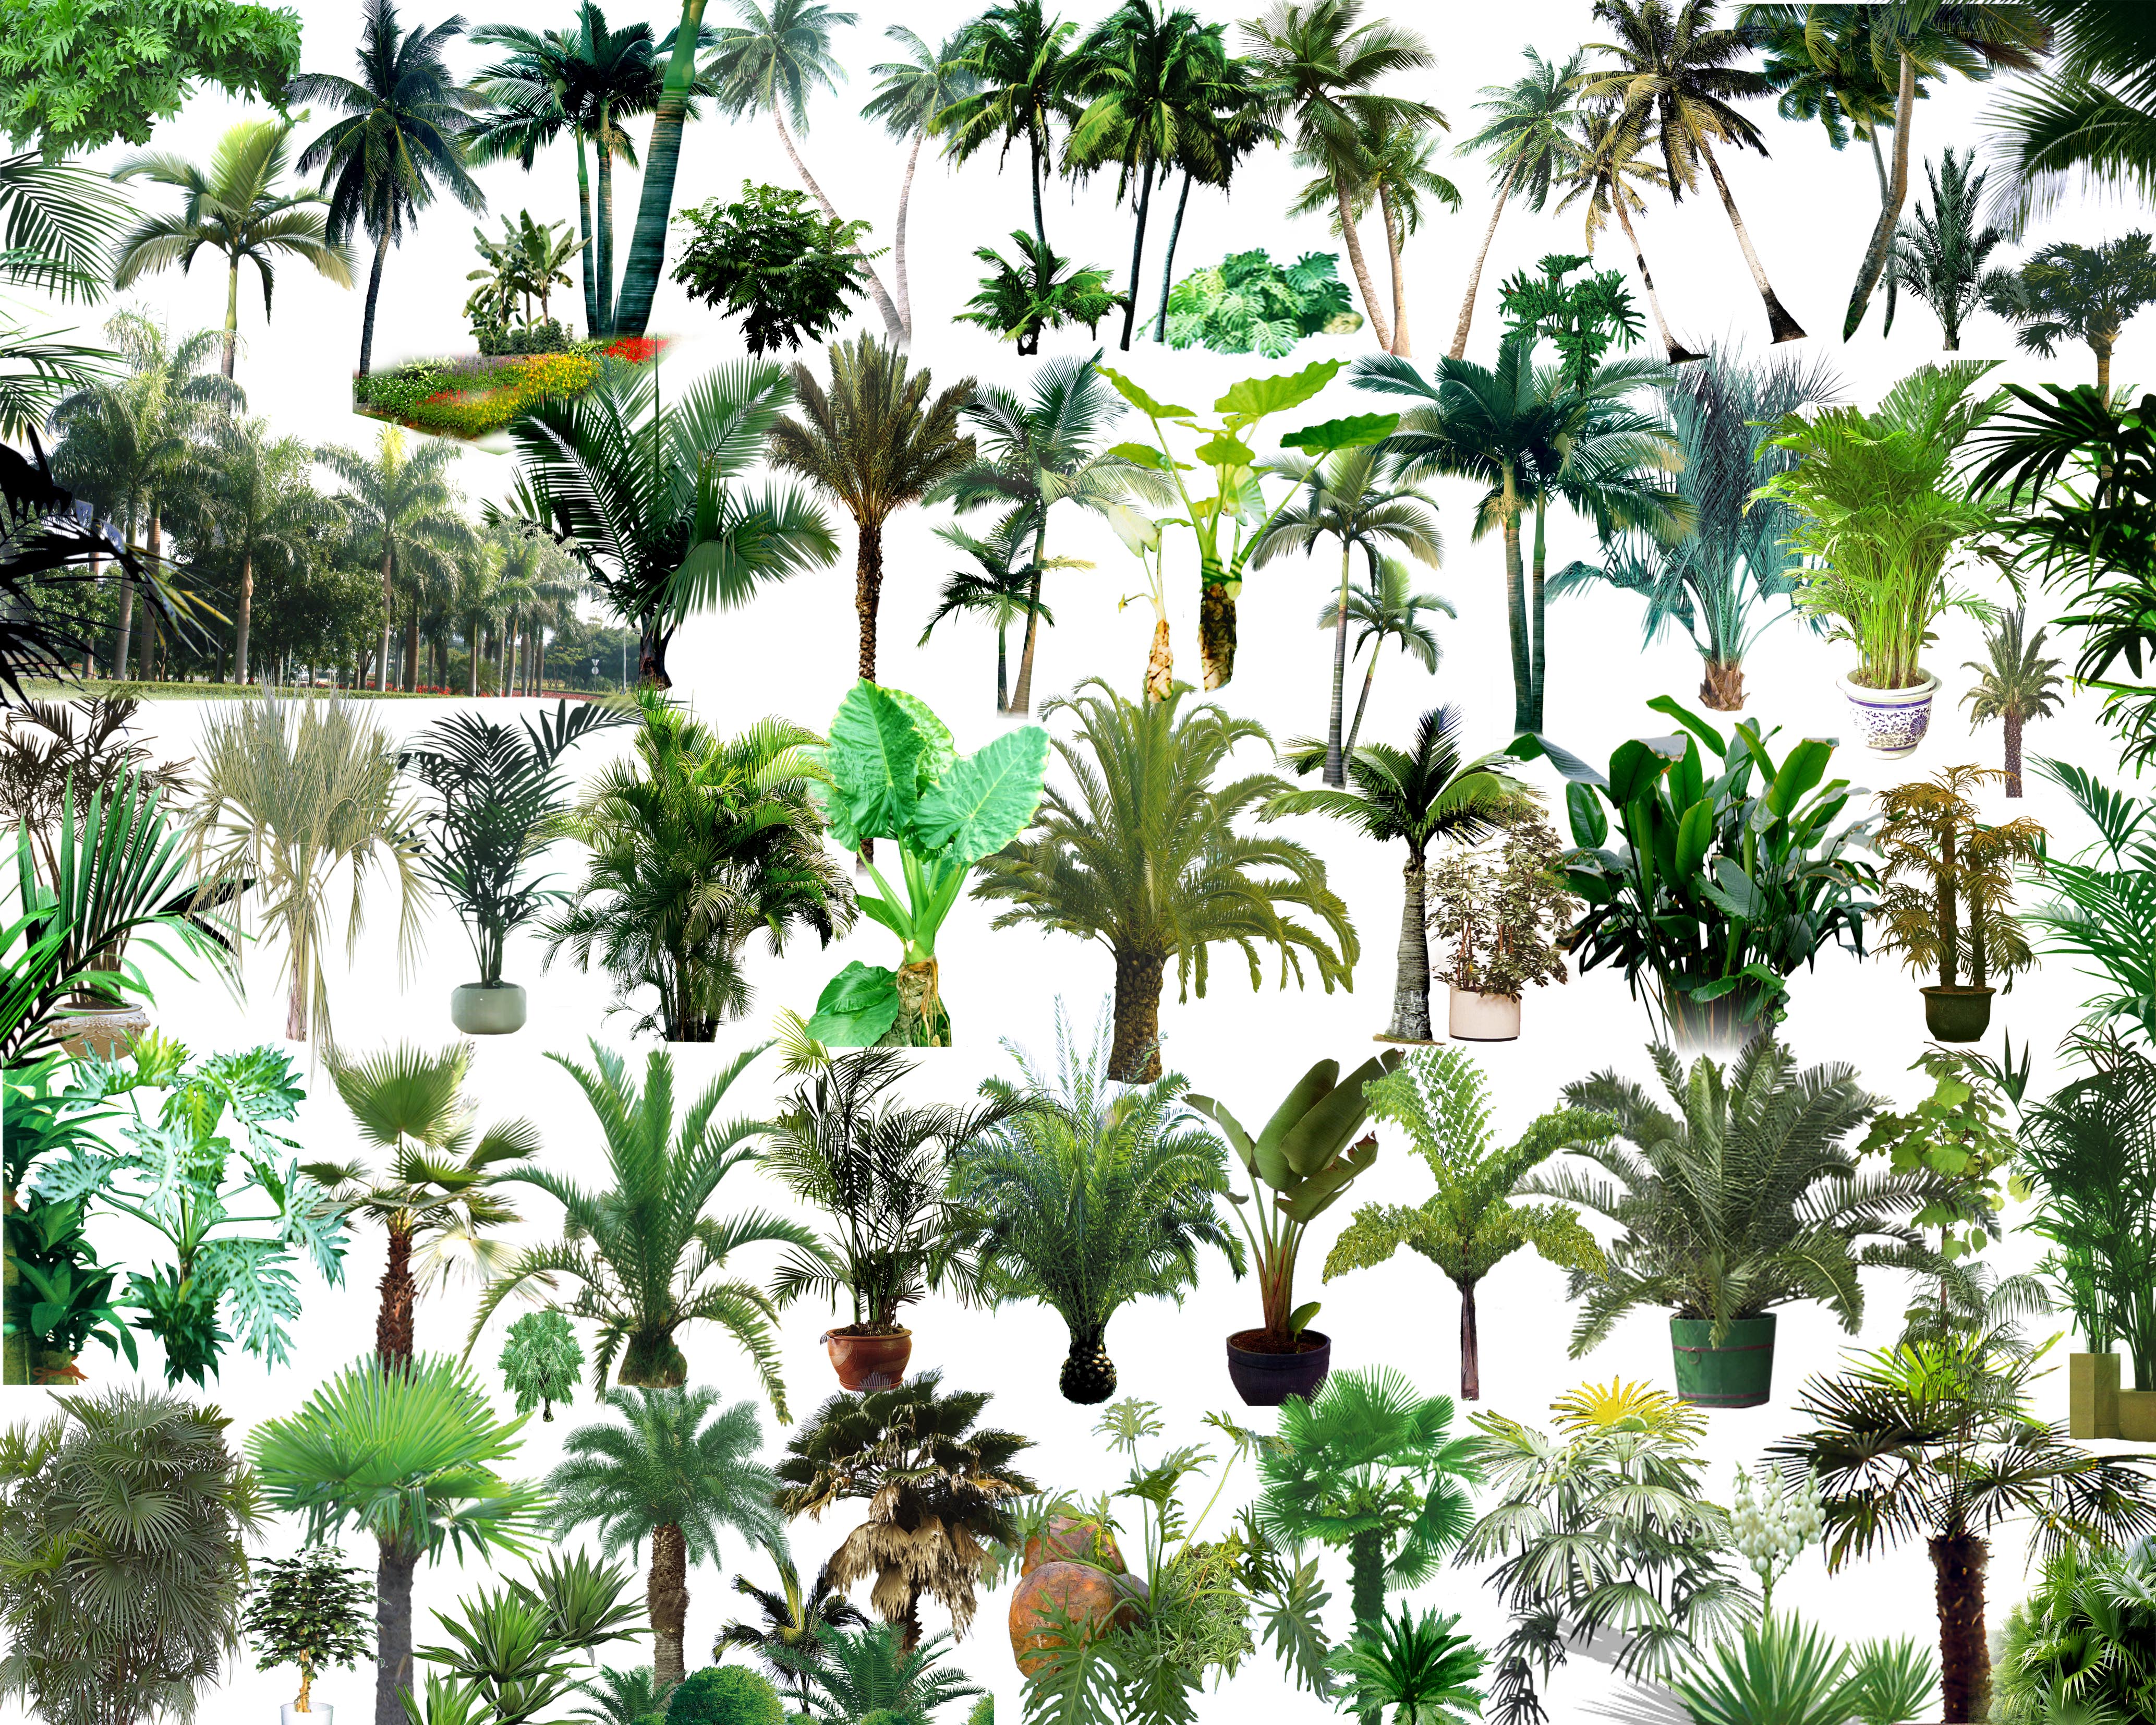 psd tropical plants